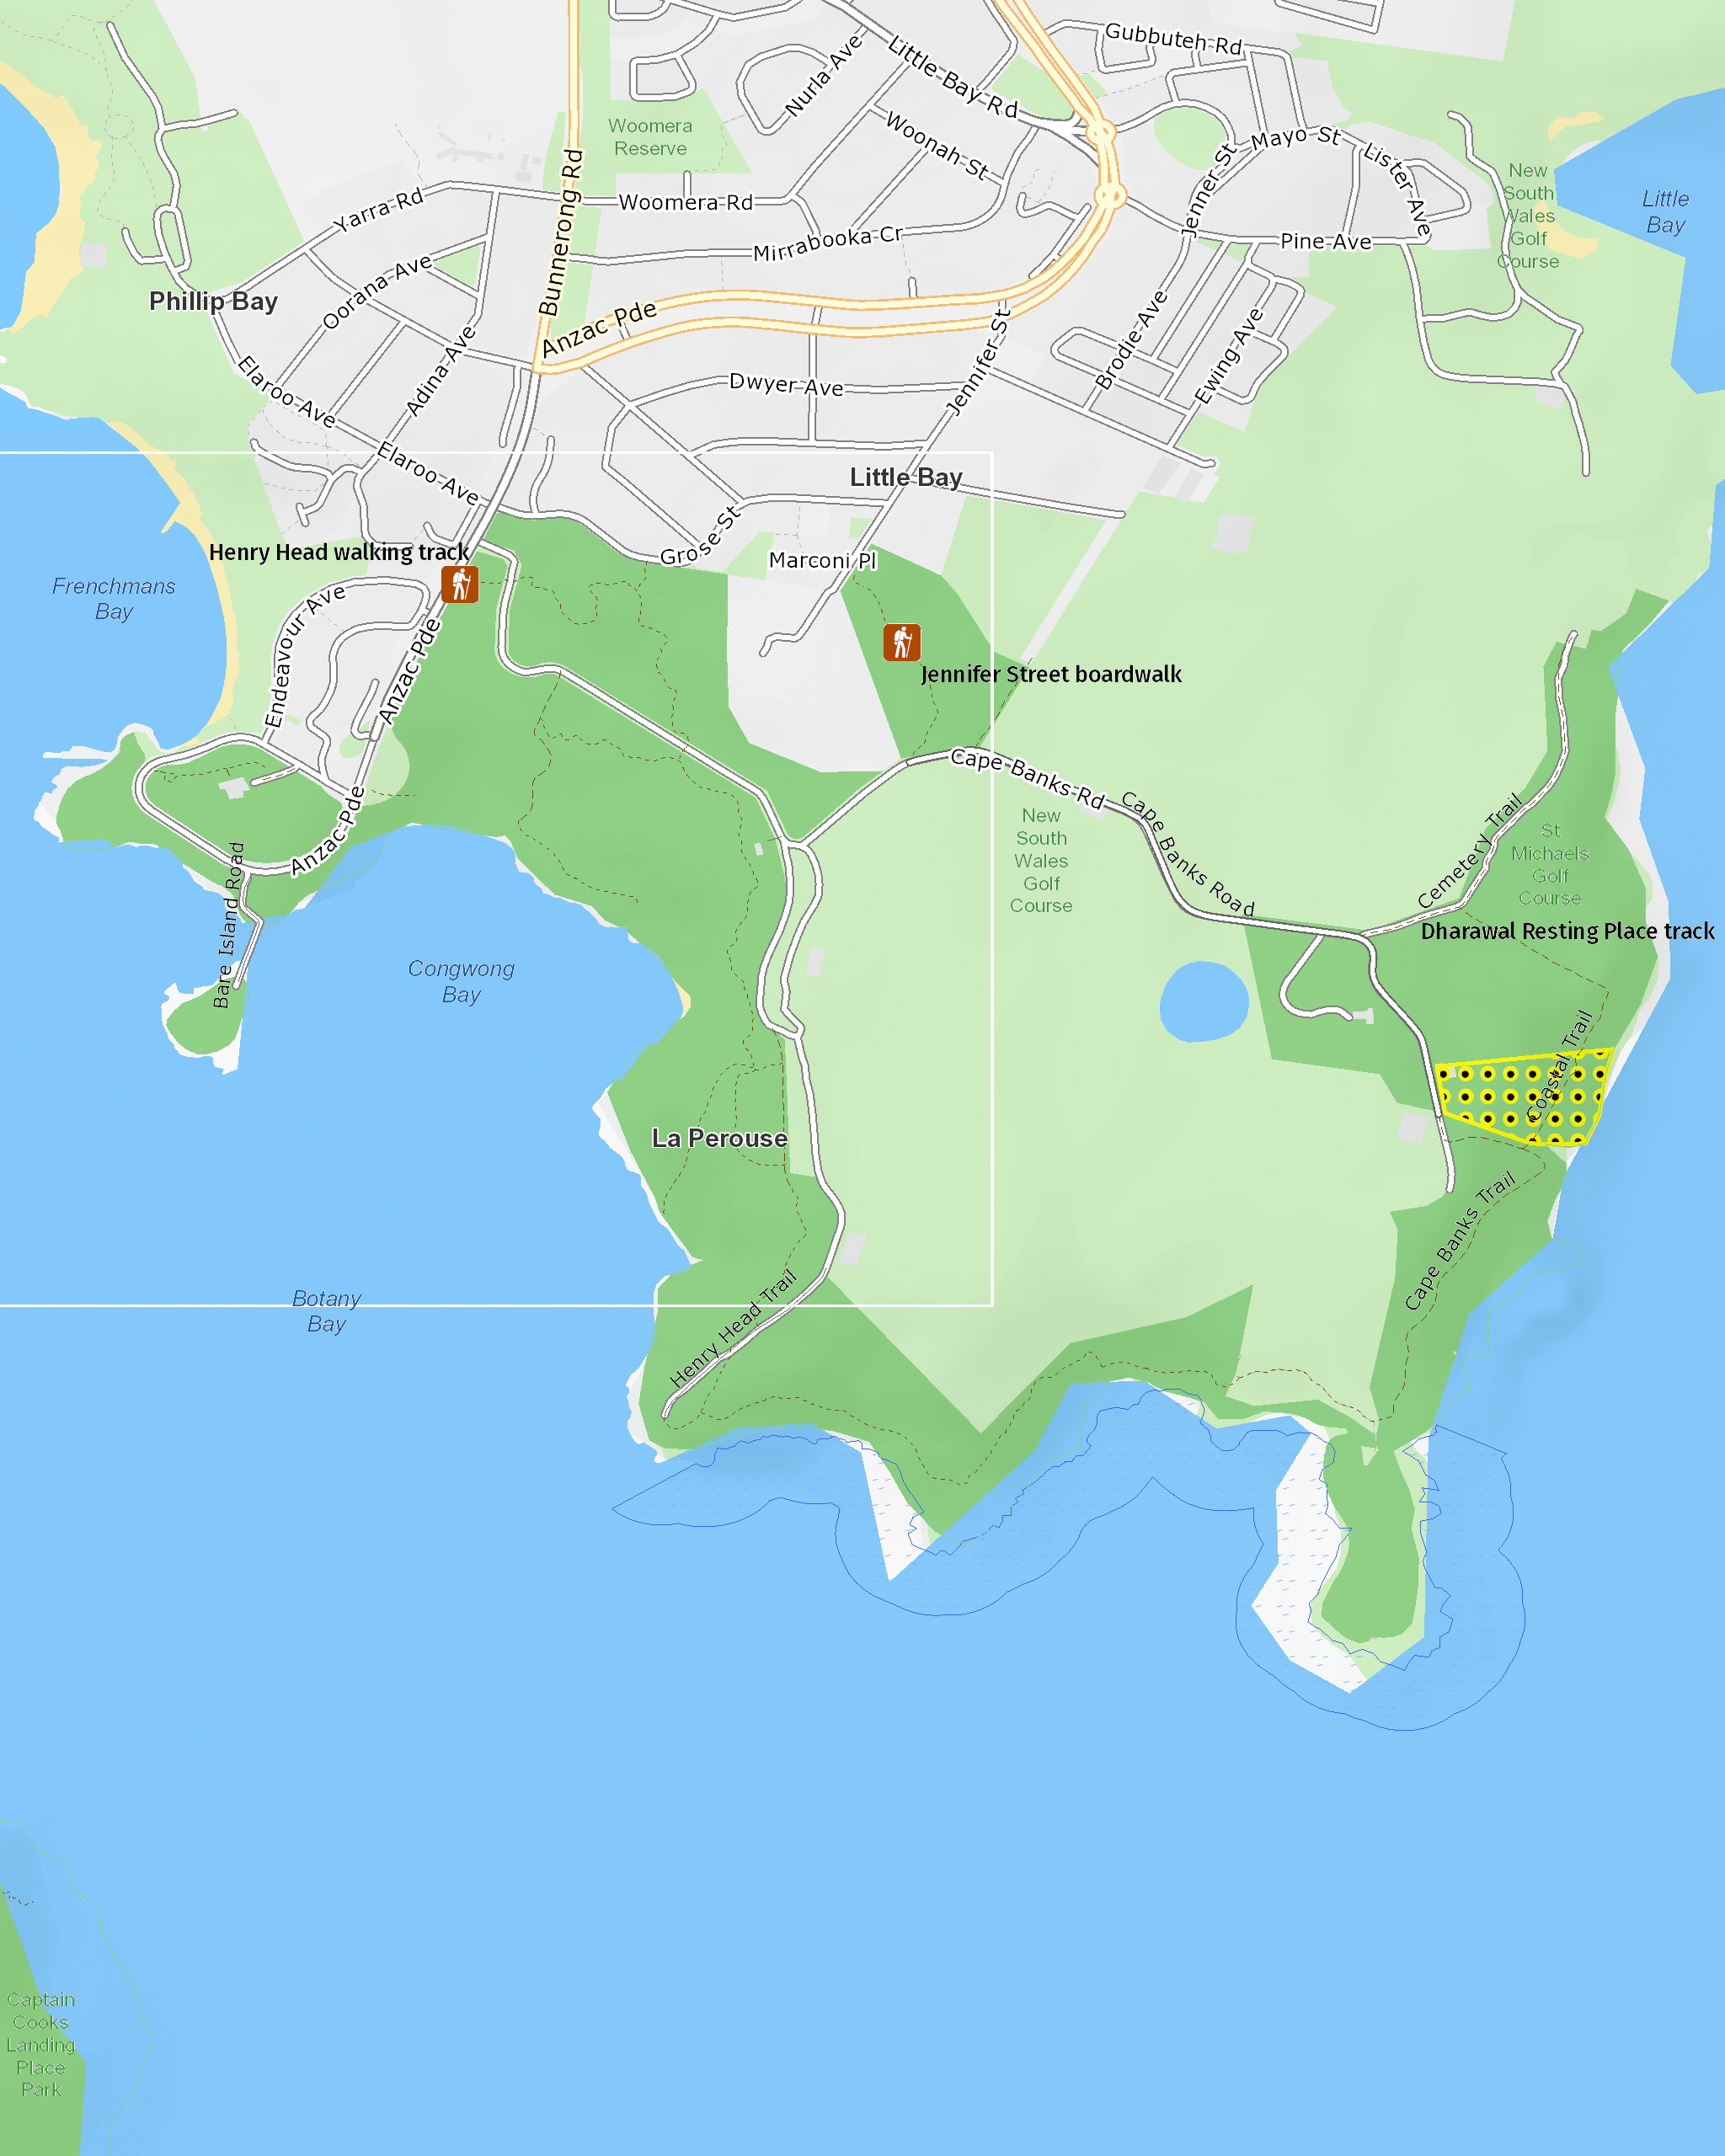 Bush regeneration at Kamay Botany Bay - overview map